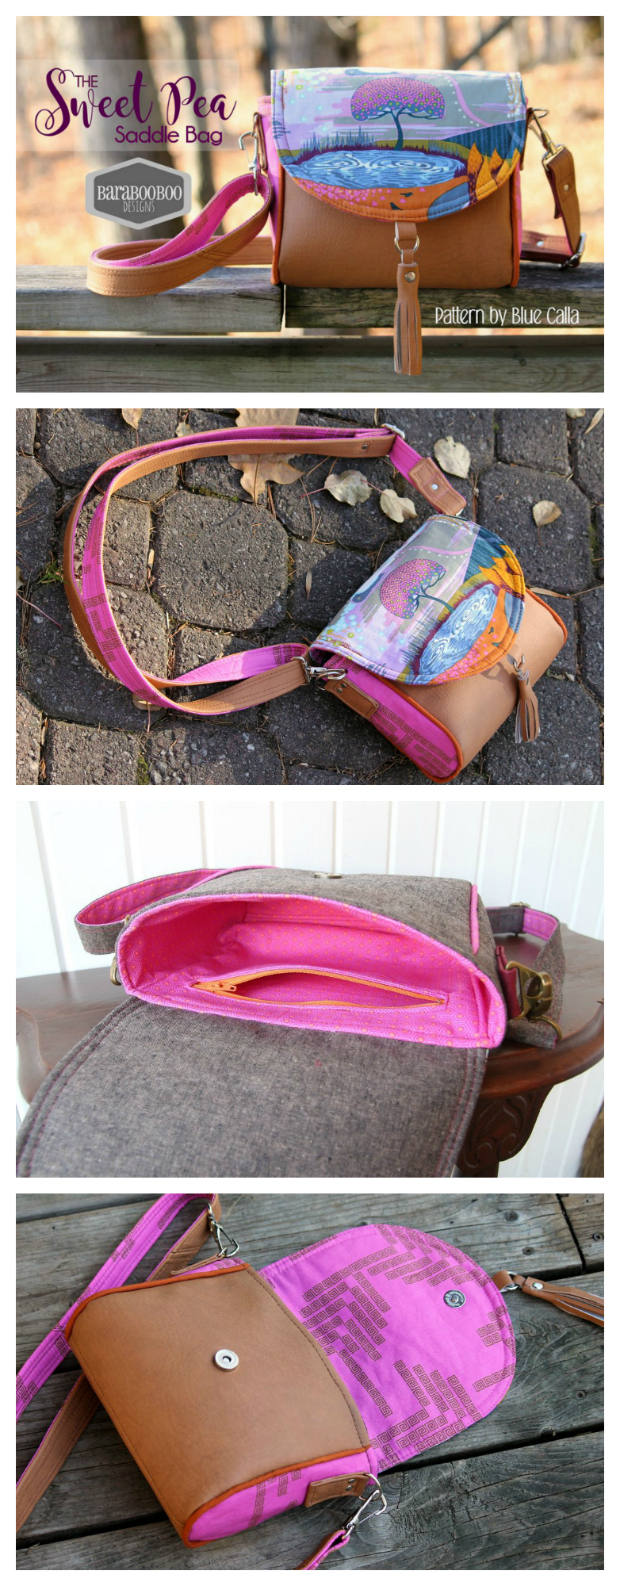 Sweet Pea Saddle Bag - FREE crossbody bag pattern